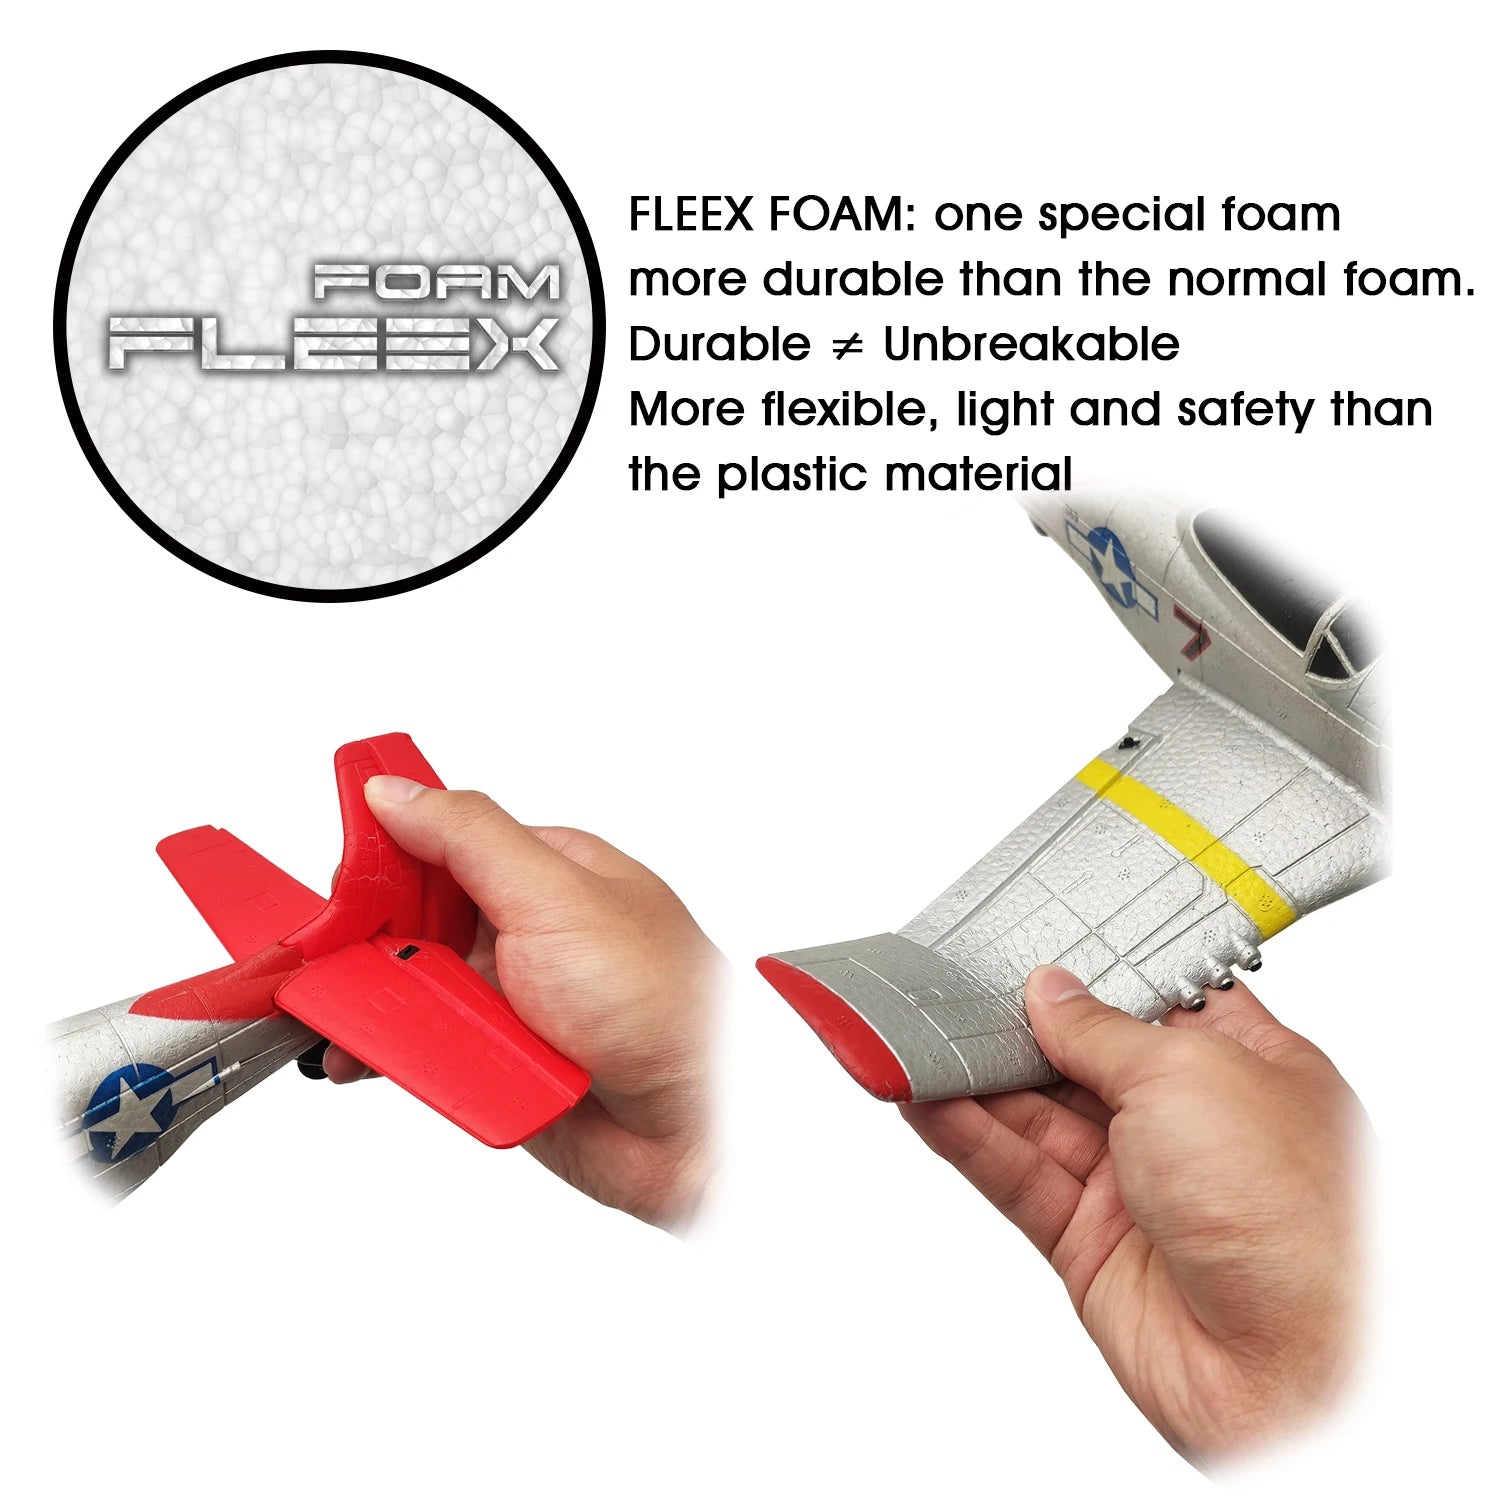 P51D RC Airplane, FLEEX FOAM: one special foam FOAM more durable than the normal foam .